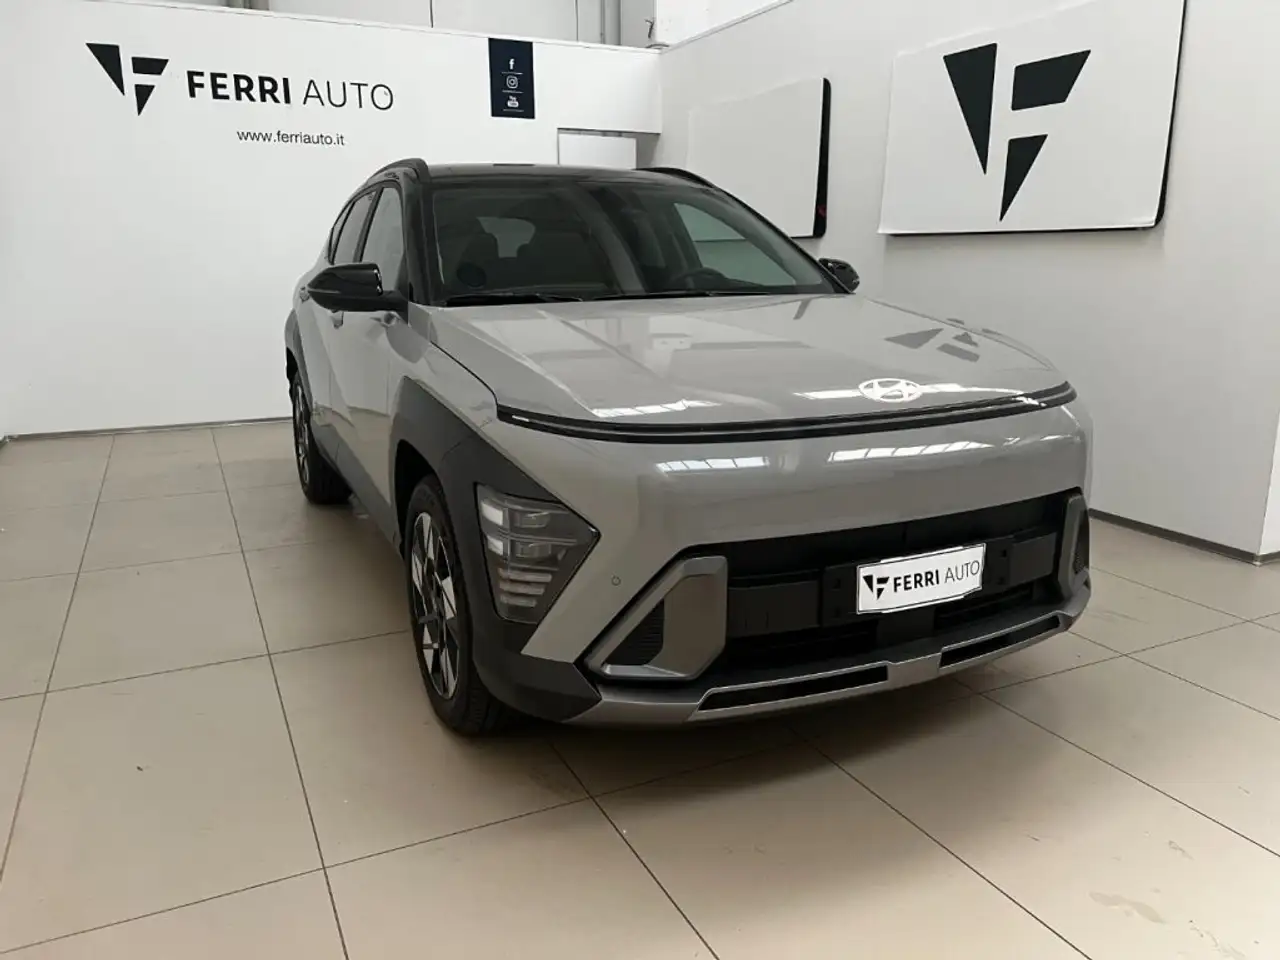 nuovo Hyundai KONA SUV/Fuoristrada/Pick-up a Feletto Umberto - Udine - Ud  per € 33.300,-